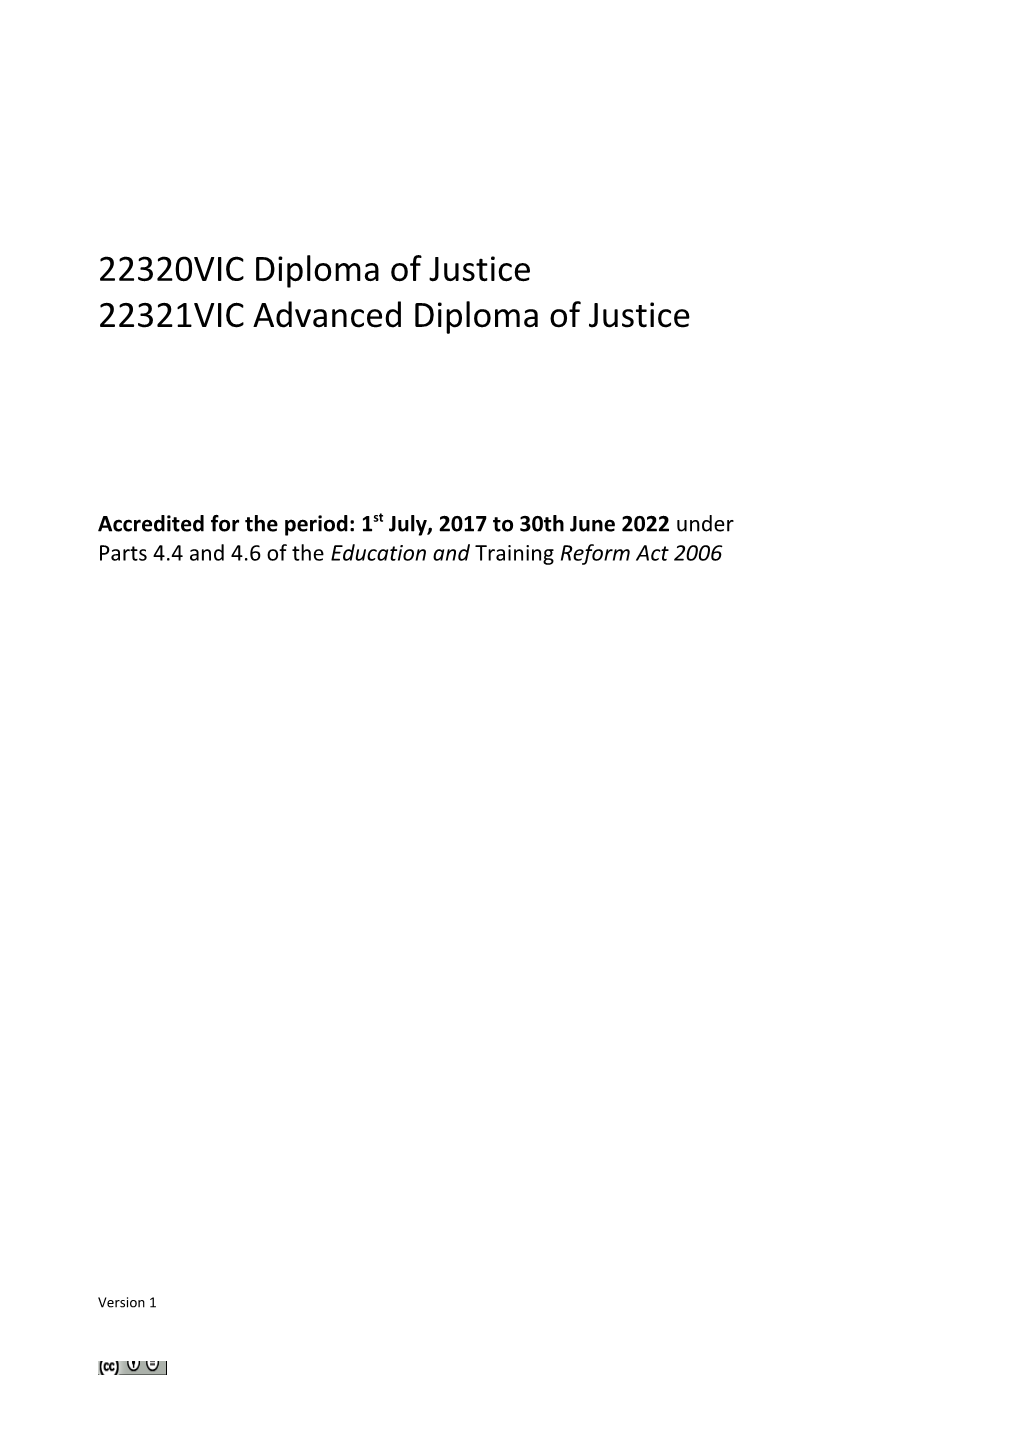 22320VIC Diploma of Justice and 22321VIC Advanced Diploma of Justice